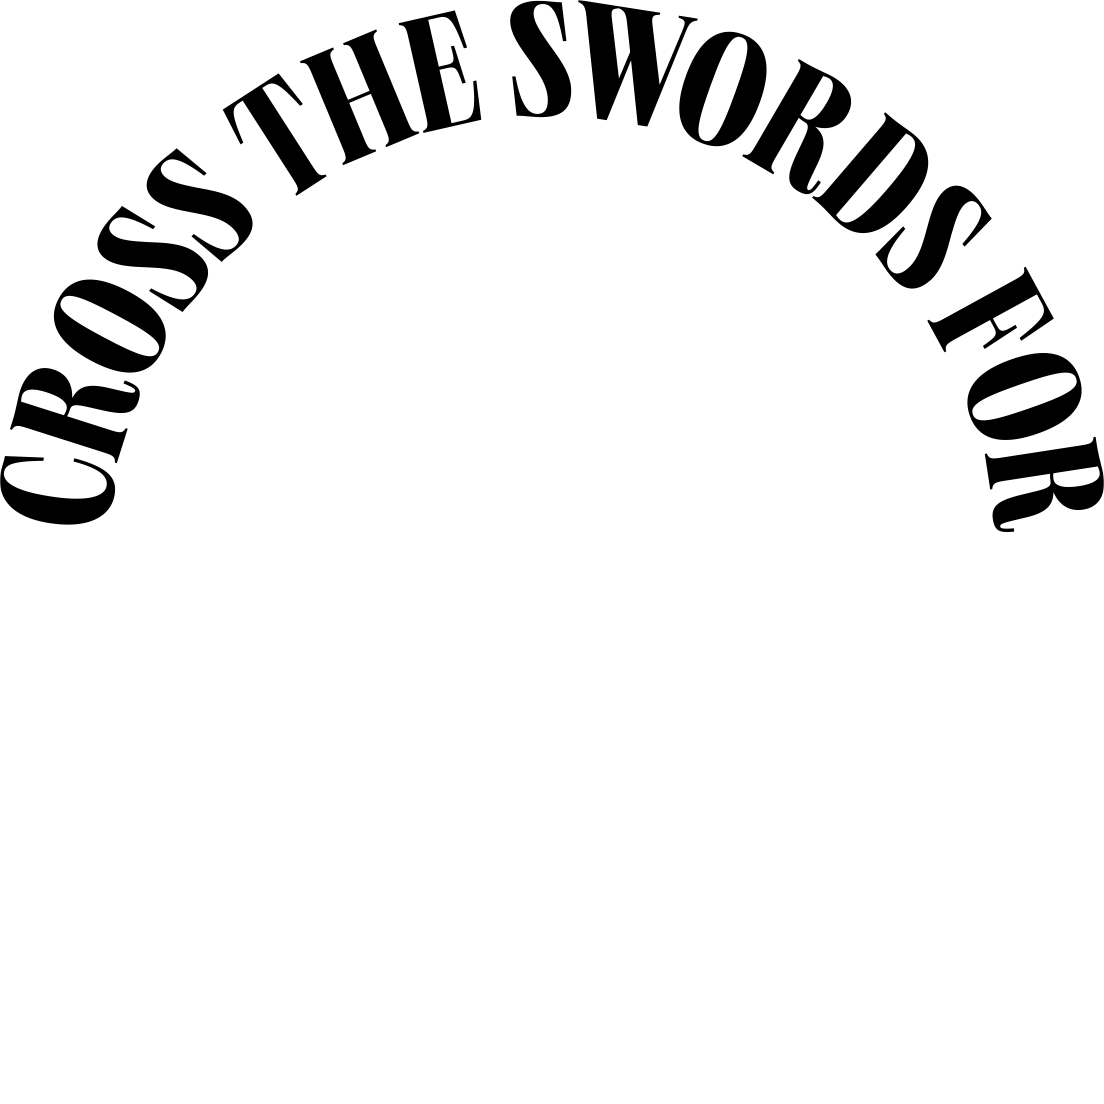 CROSS THE SWORDS FOR